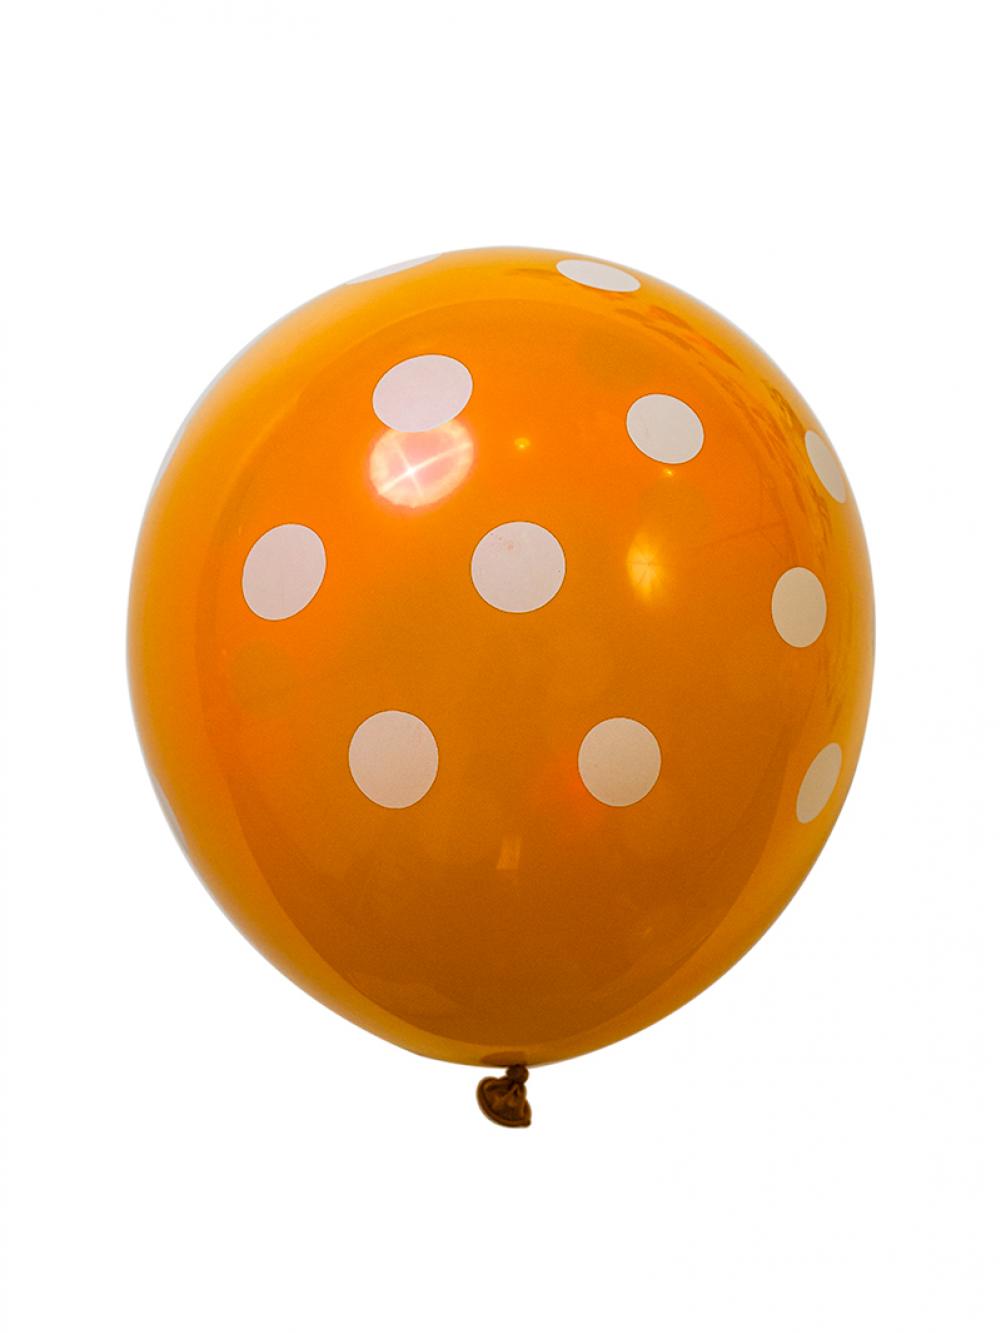 12 Inch Standard Polka Dot Balloons Orange Balloon White Dot (100PCS)